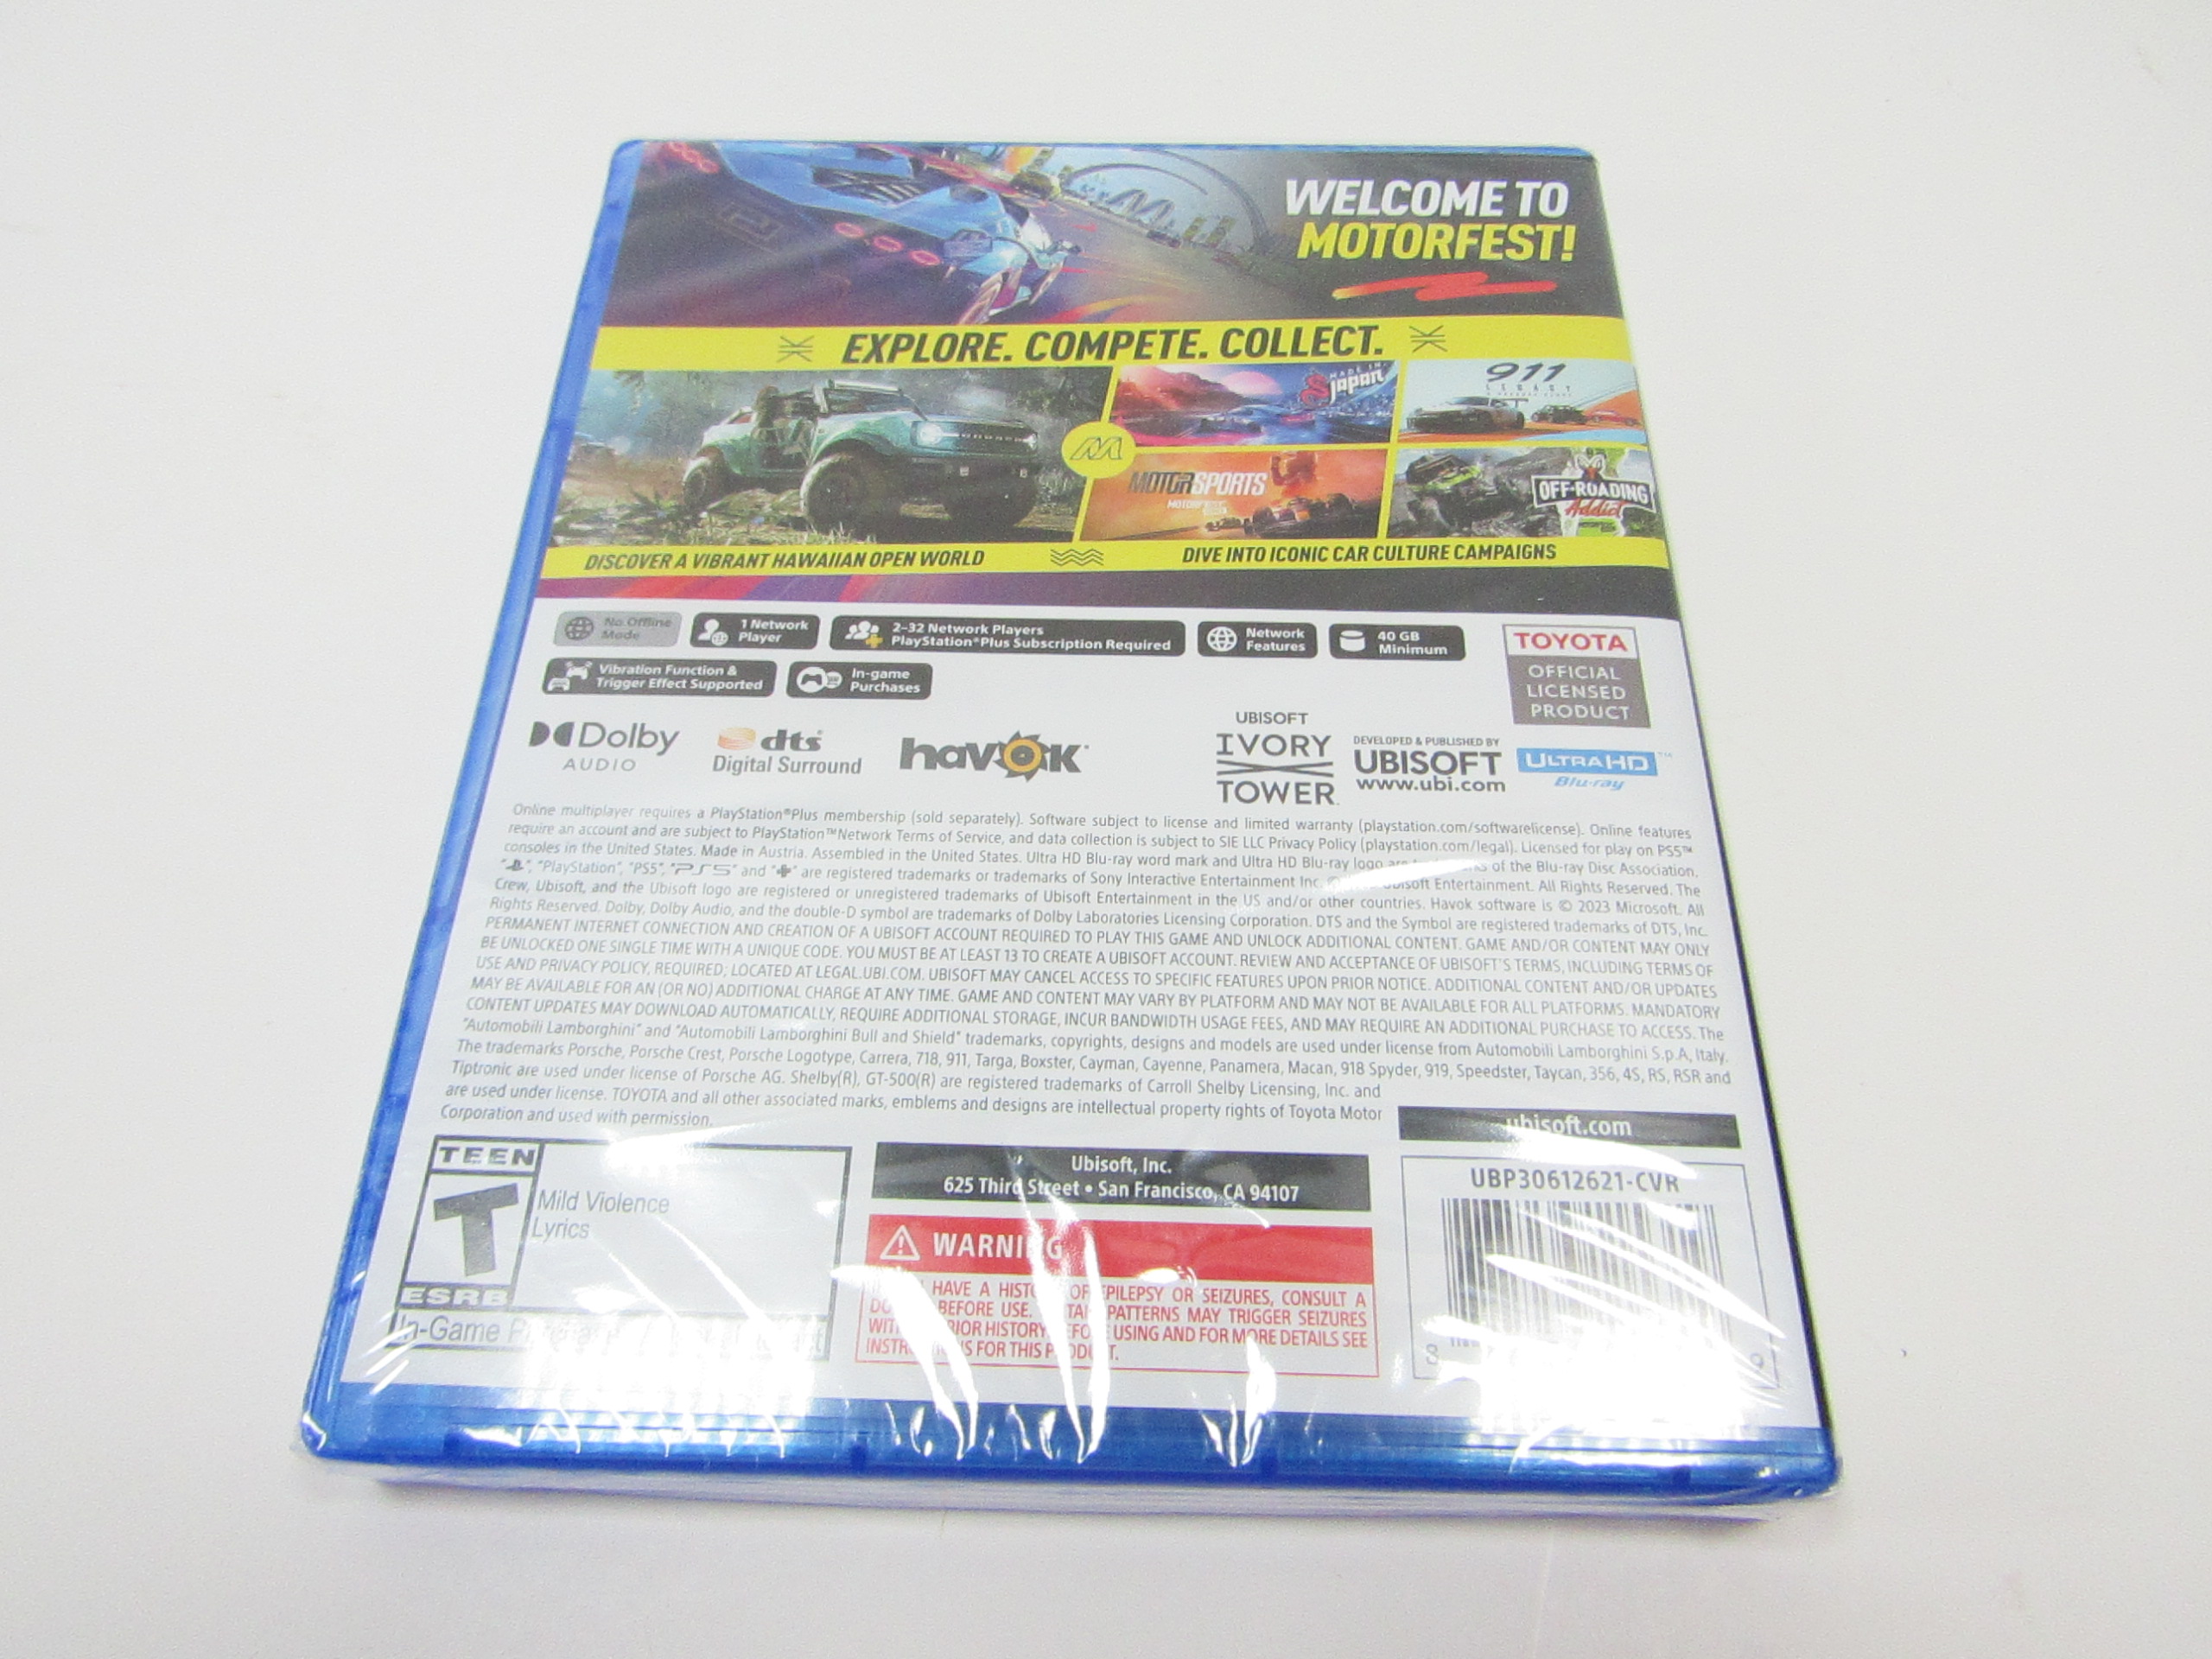 The Crew Motorfest - PlayStation5